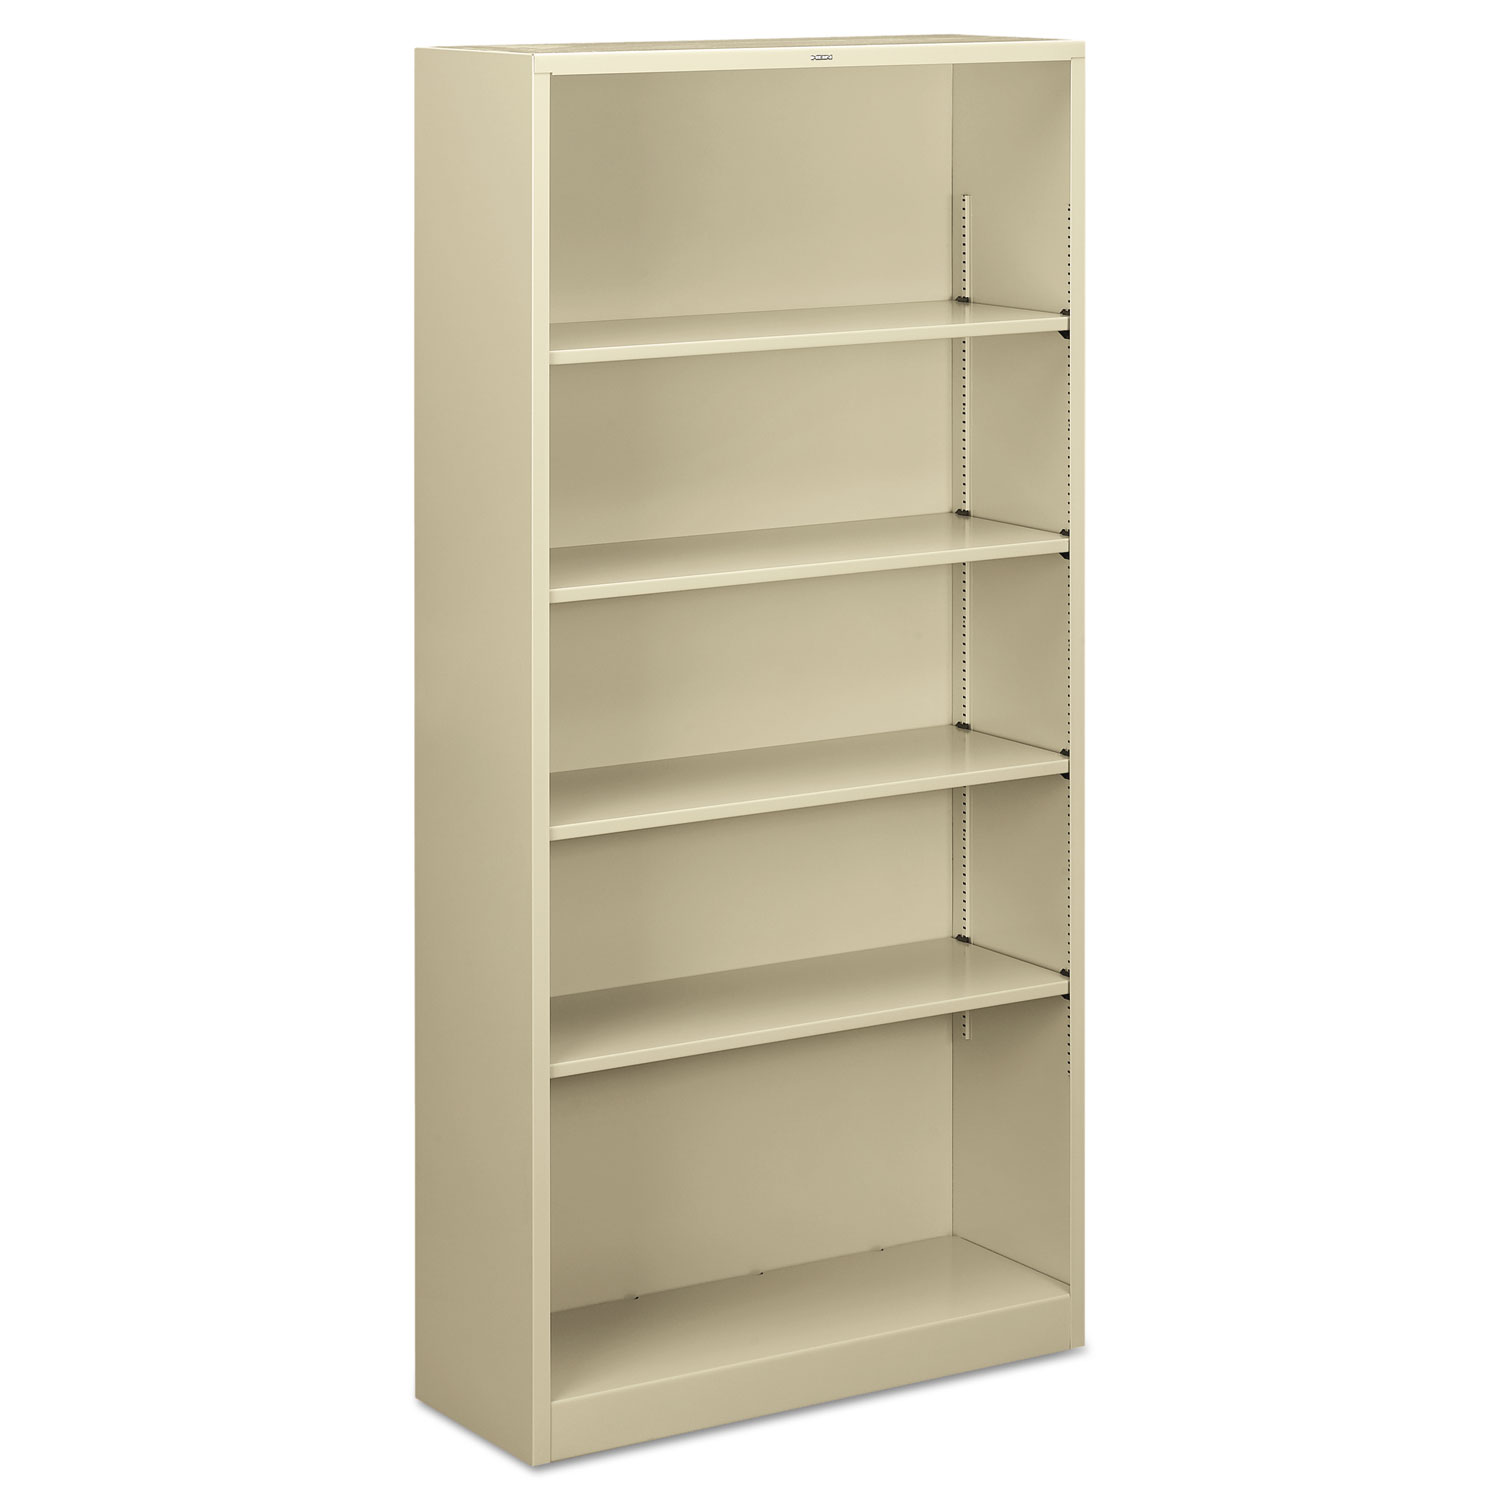  HON HS72ABC.L Metal Bookcase, Five-Shelf, 34-1/2w x 12-5/8d x 71h, Putty (HONS72ABCL) 